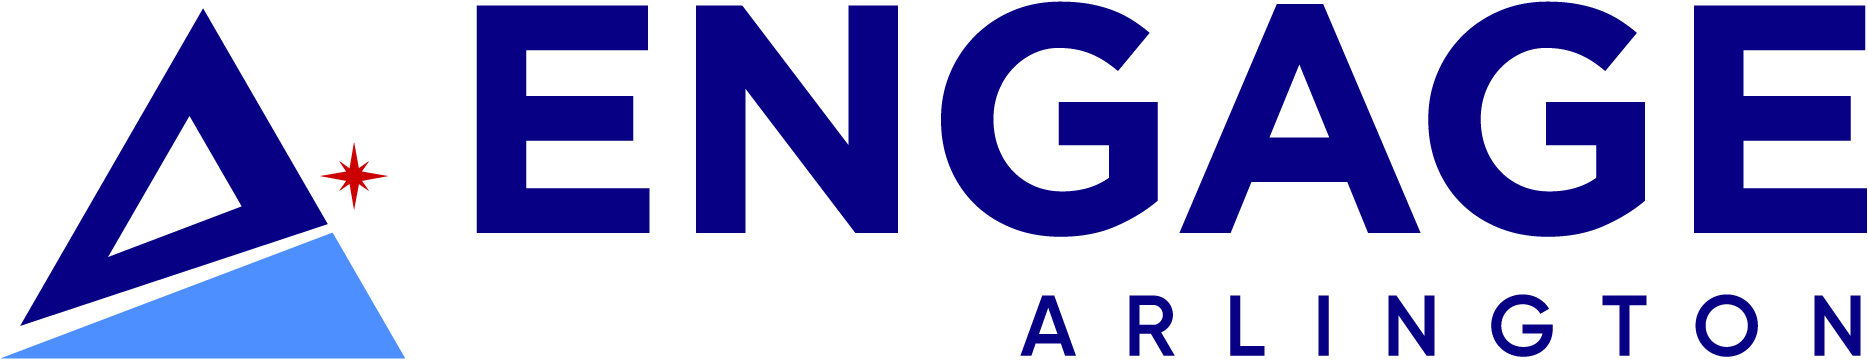 VOMO Logo